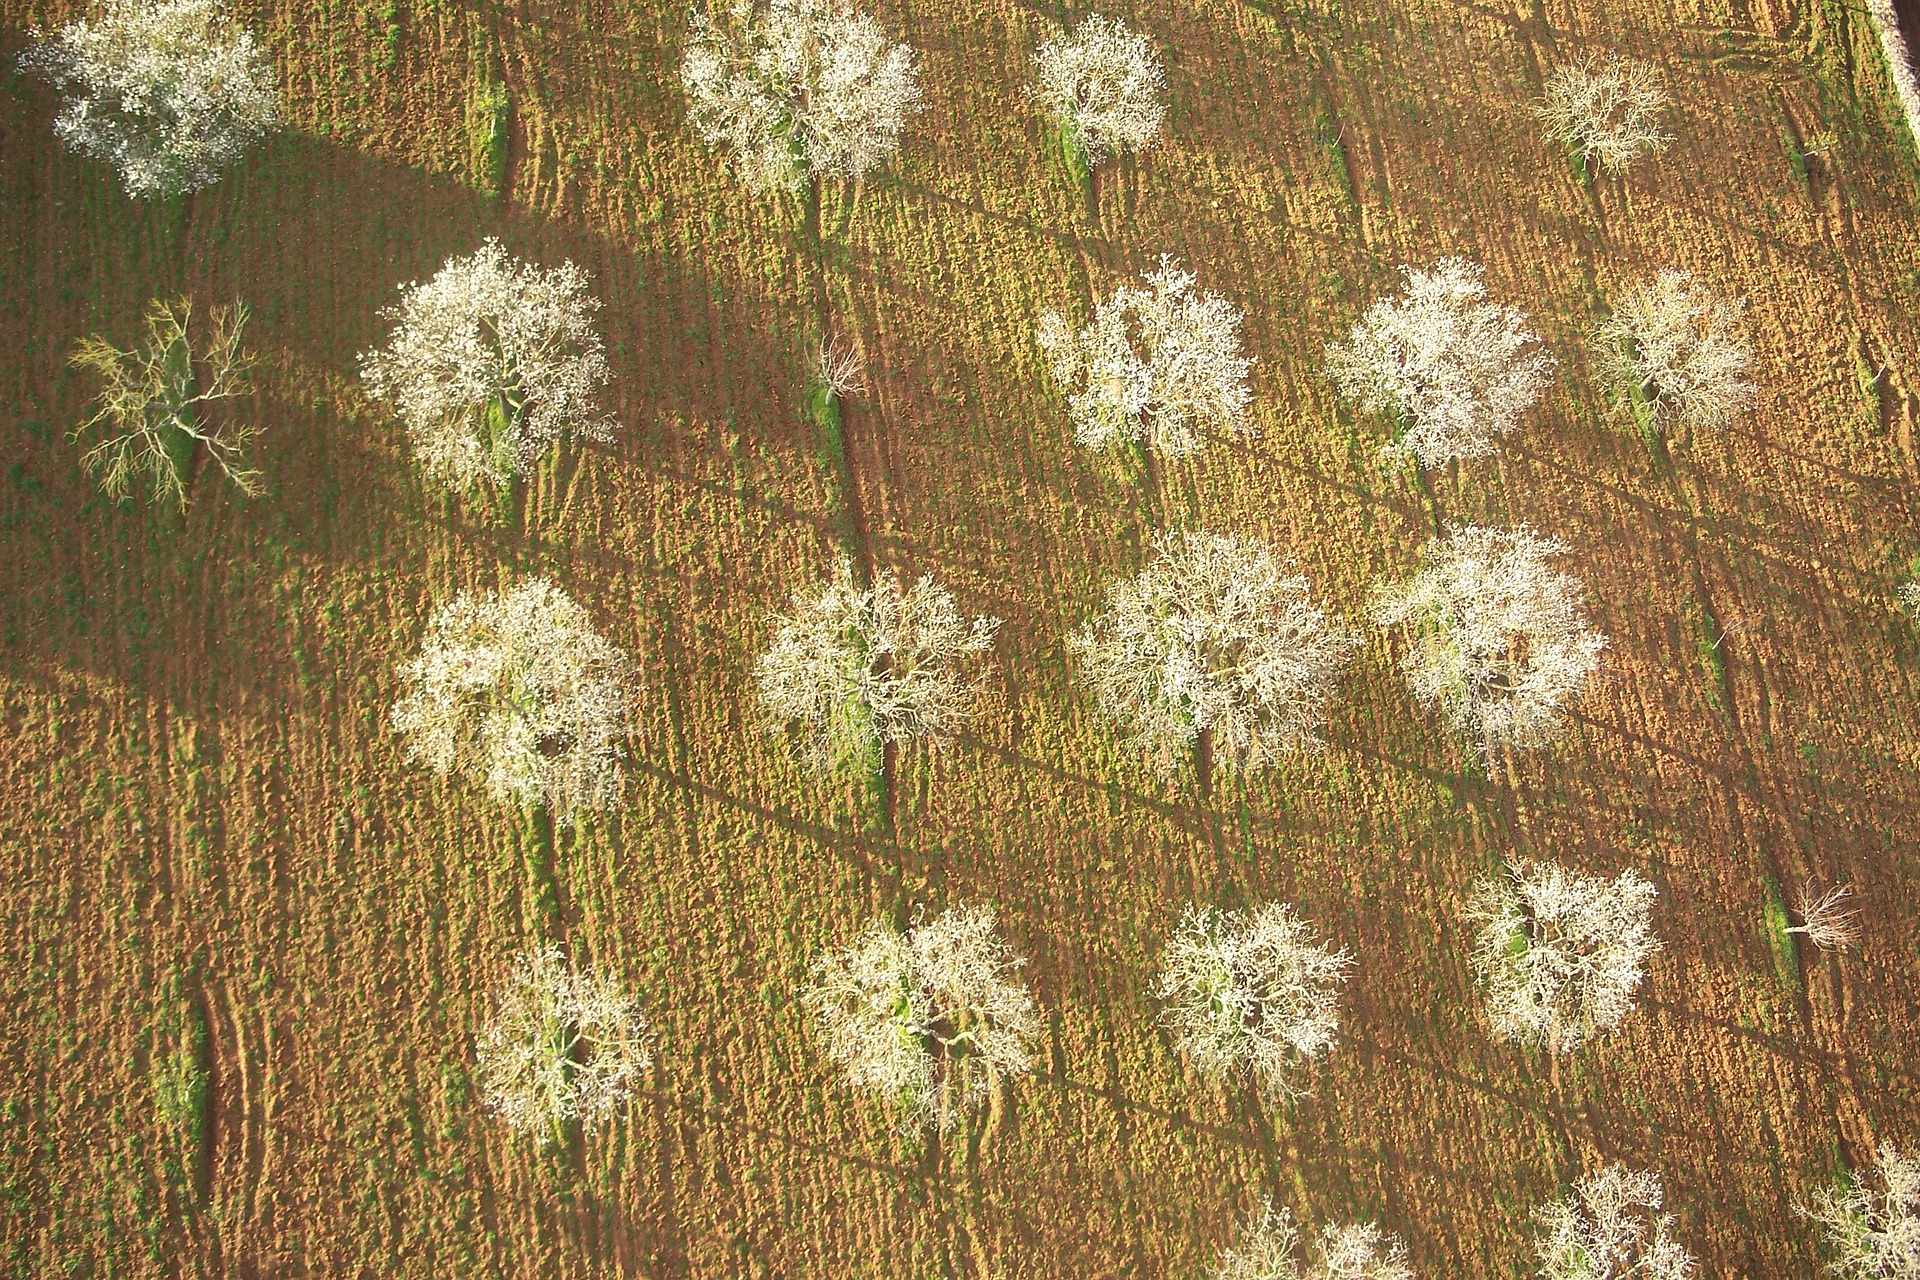 Mallorca almond field